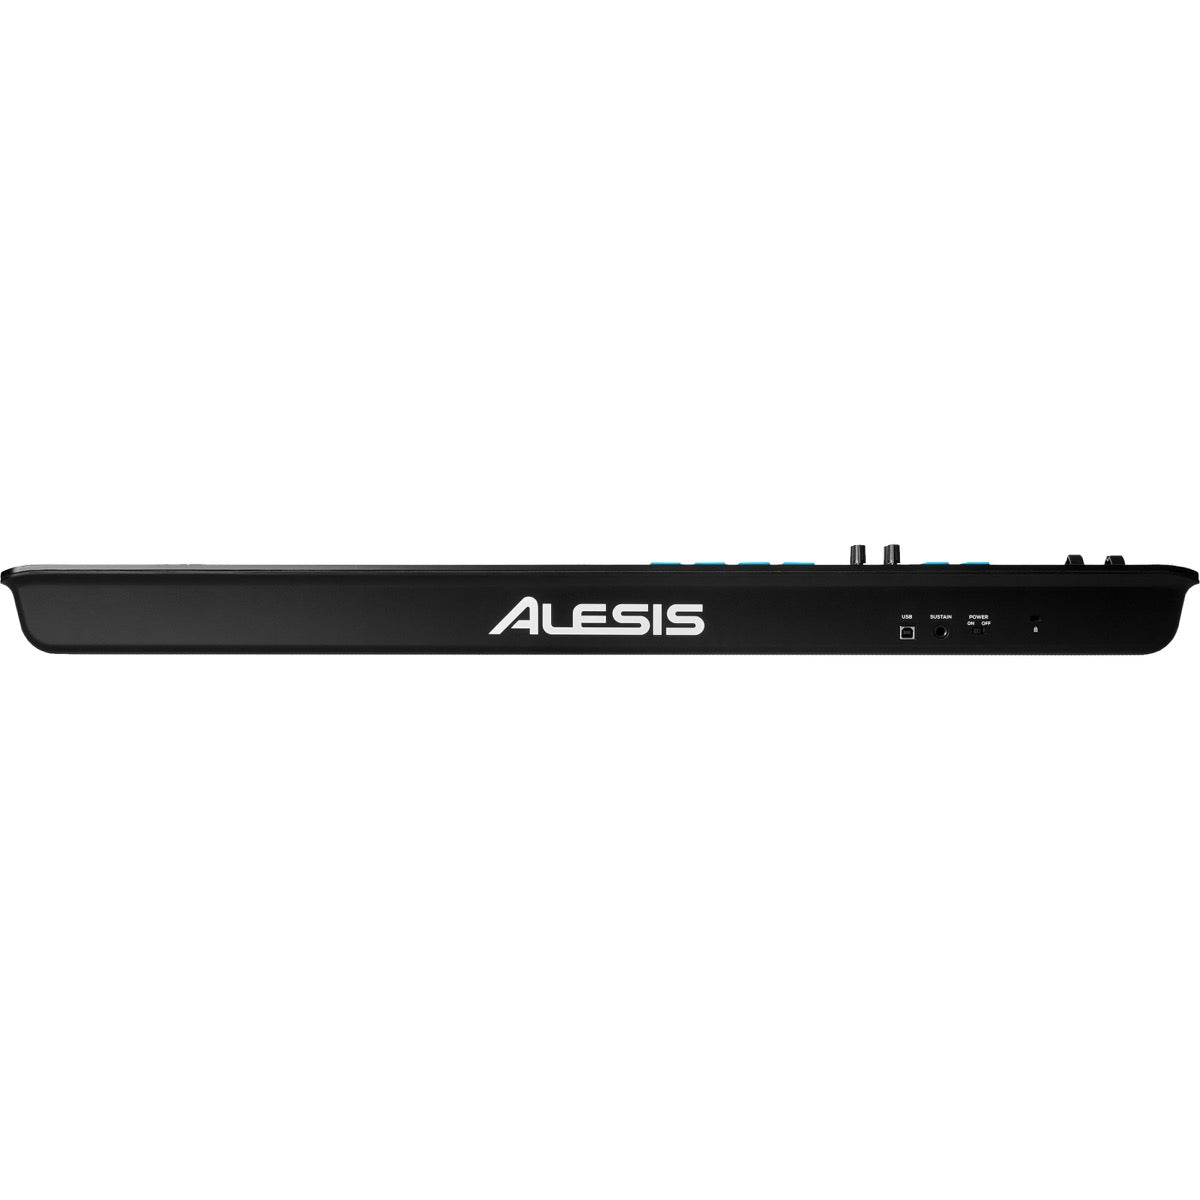 Alesis V61 MKII 61-Key USB-MIDI Keyboard Controller View 2